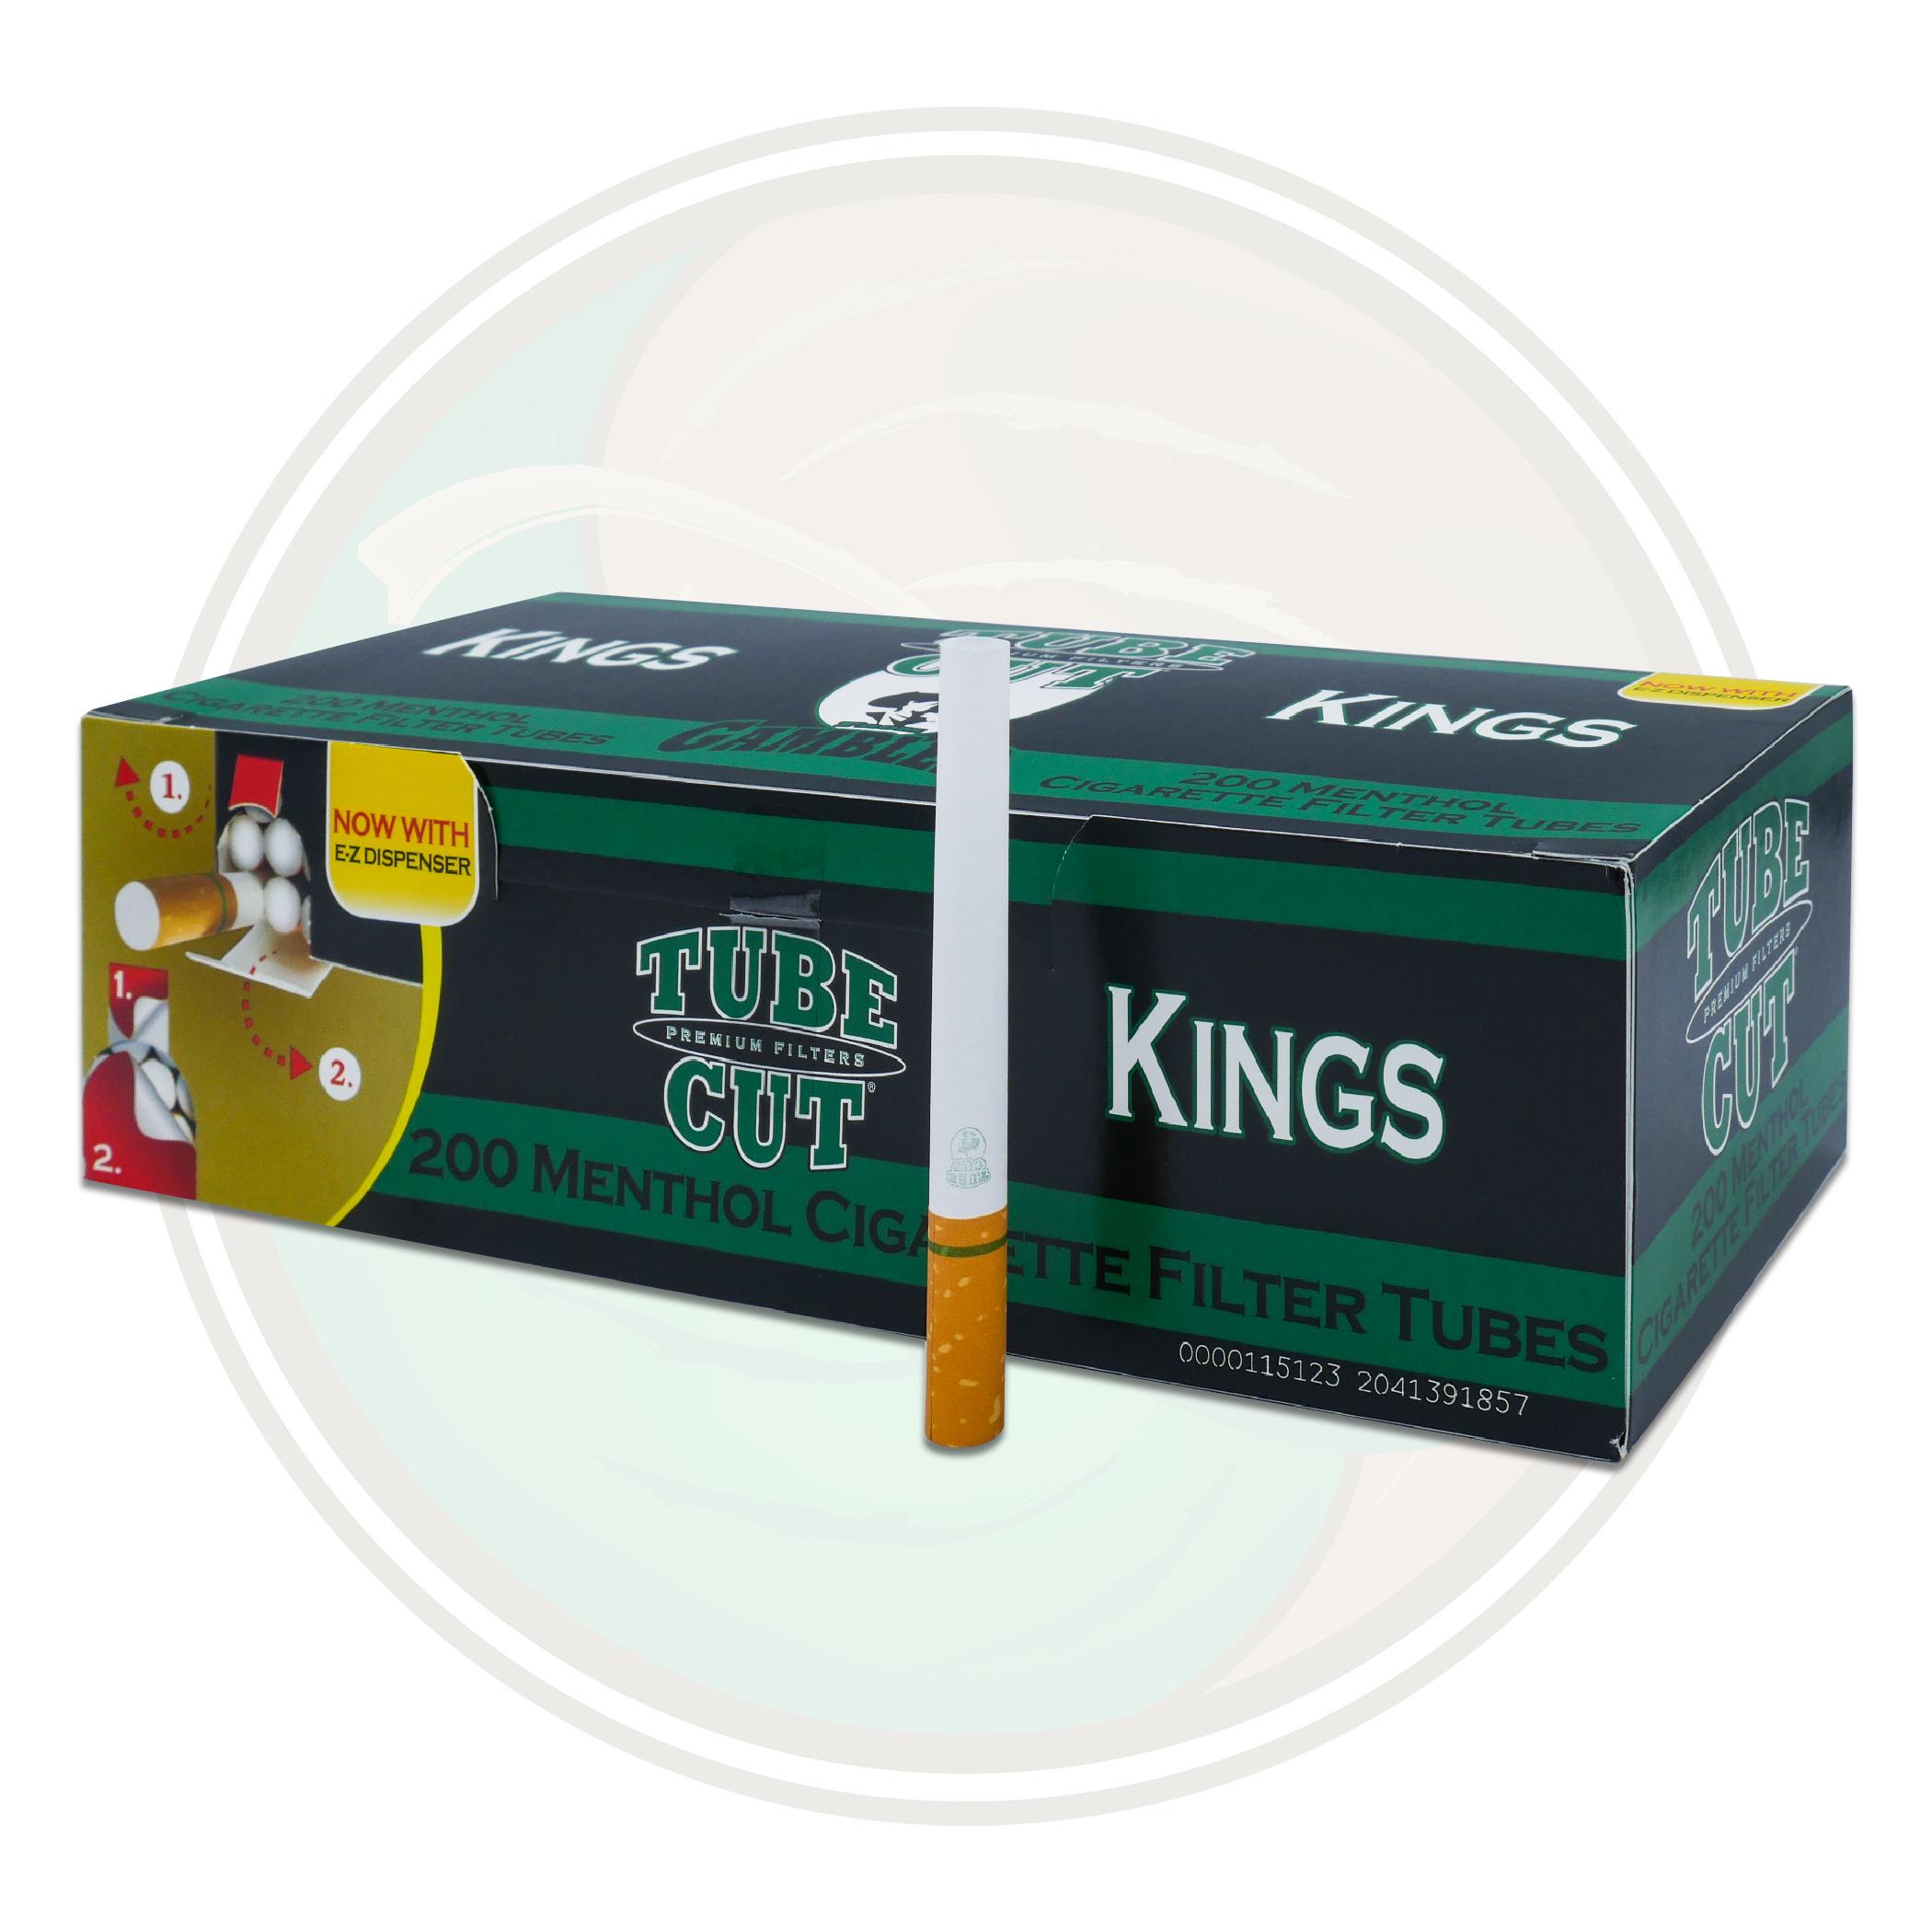 Gambler Tube Cut King Size Menthol Cigarette Tubes for MYO